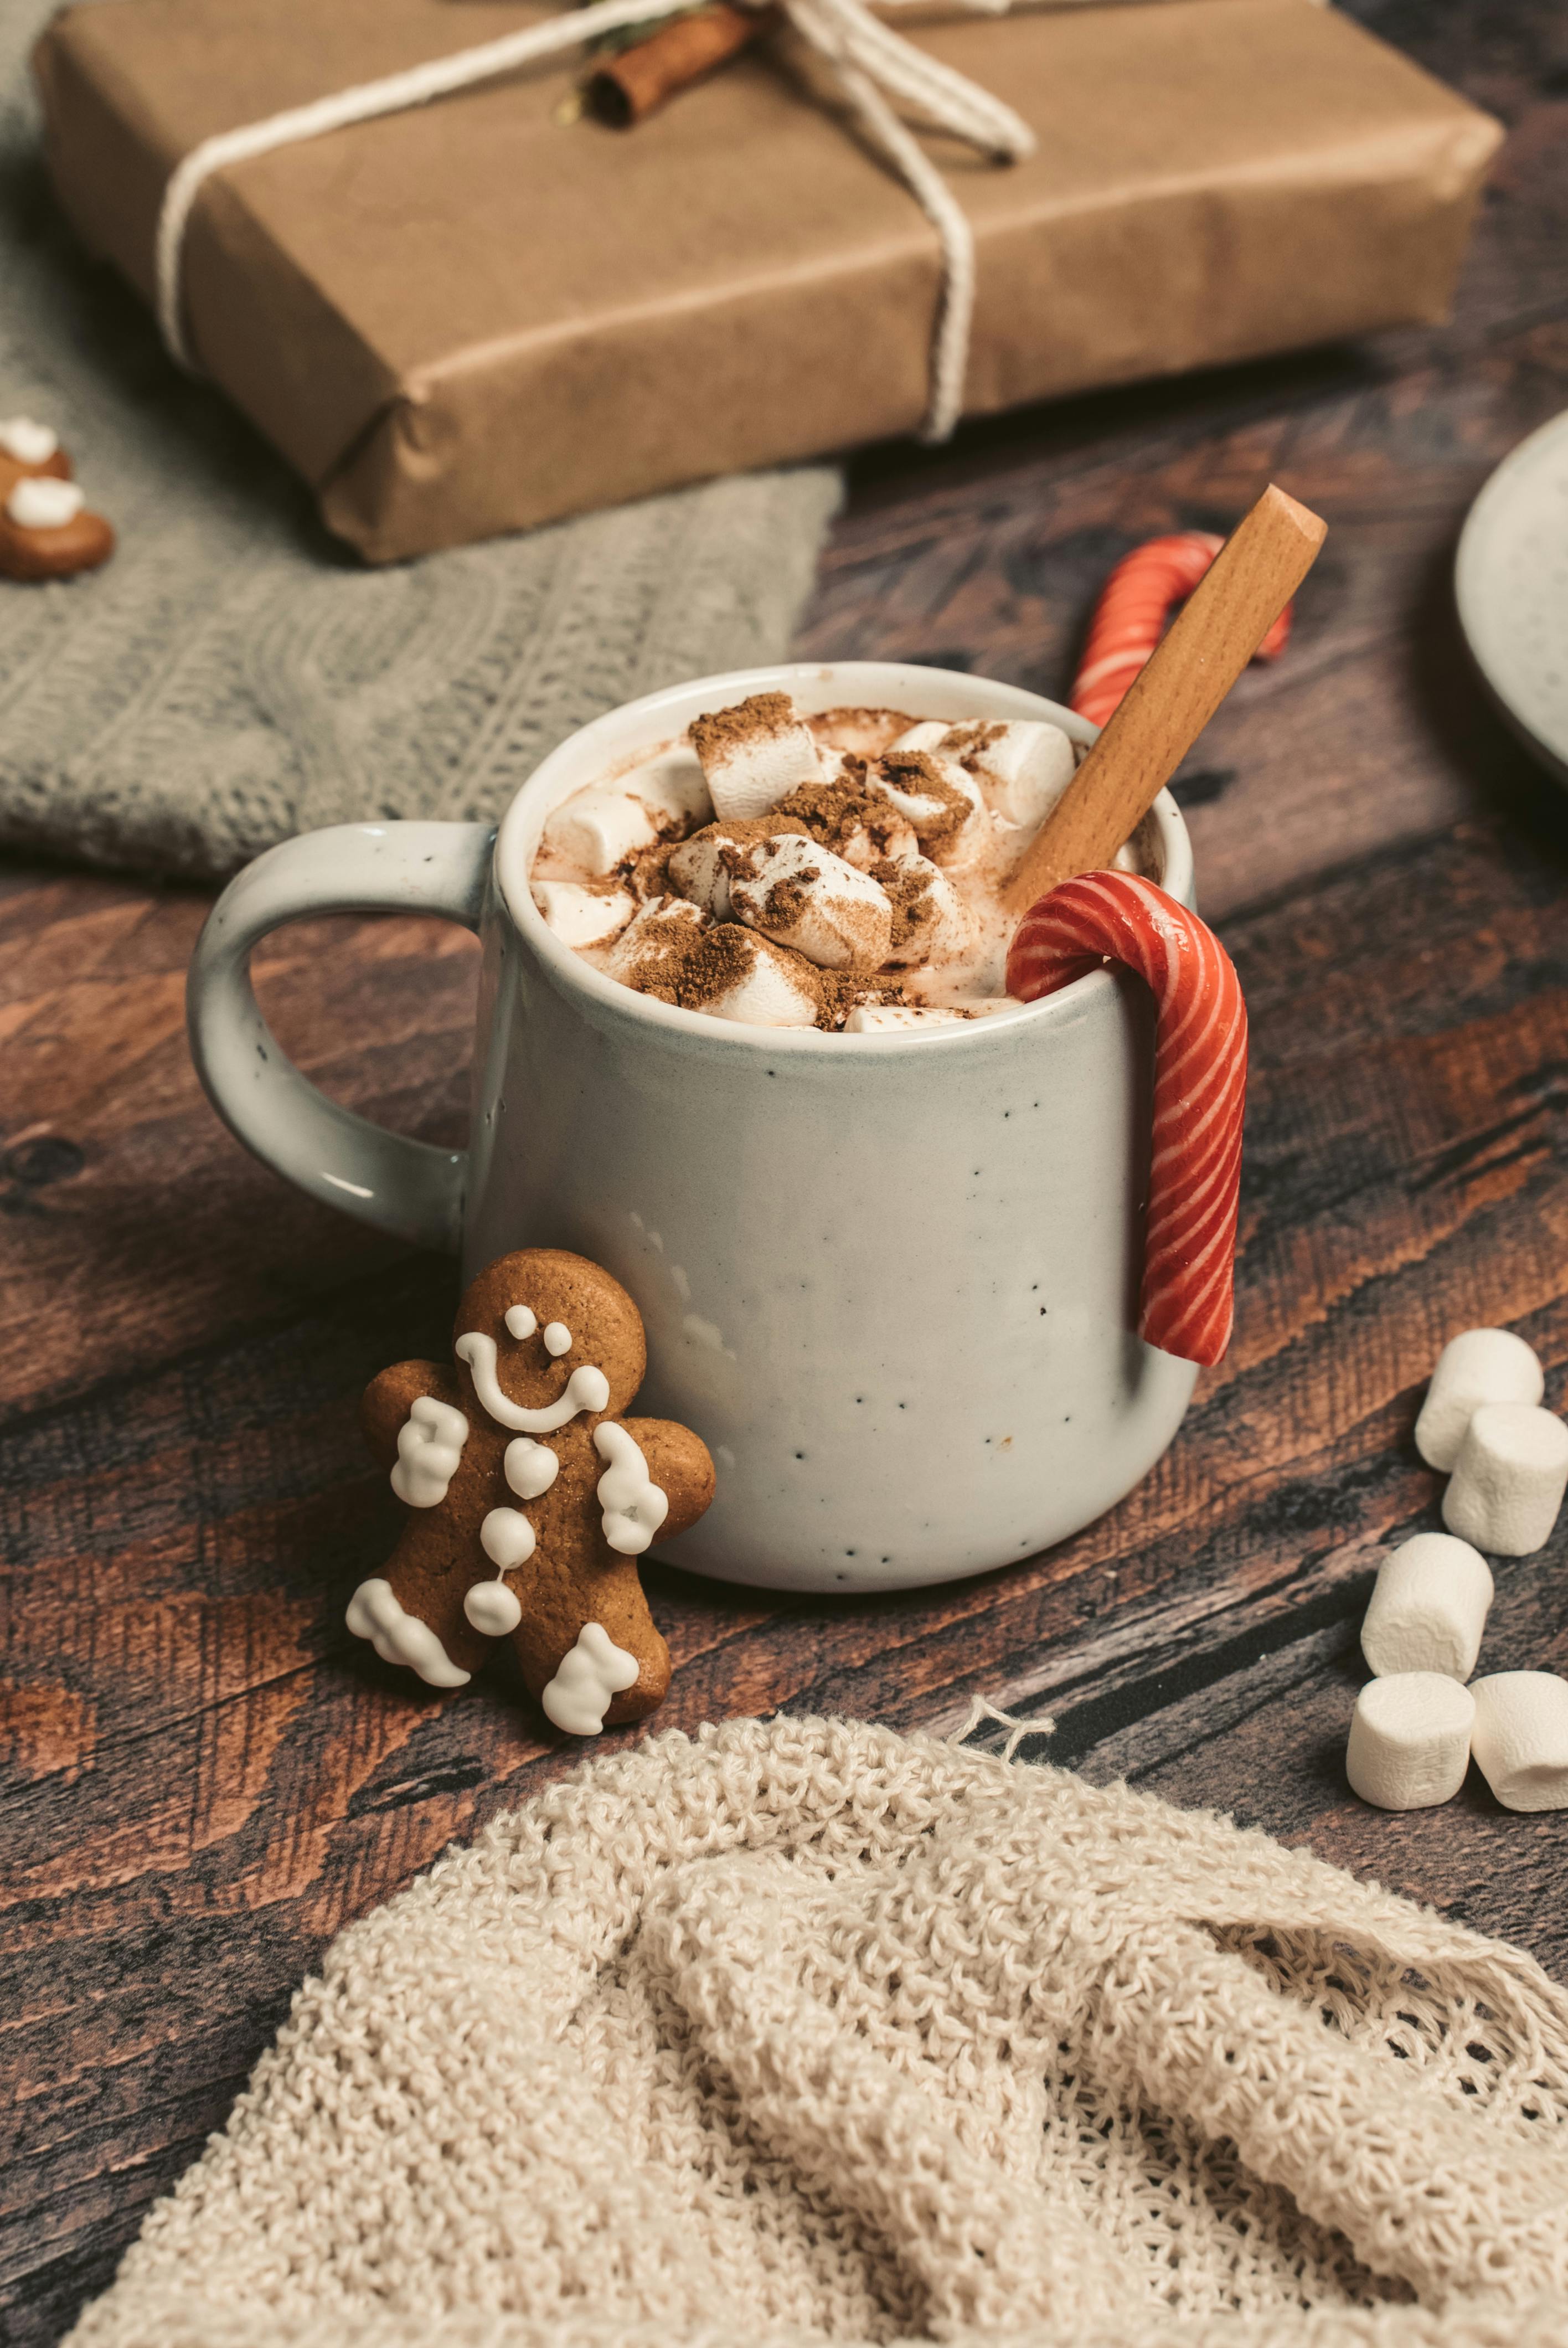 A Hot Chocolate in the Mug  Free Stock Photo